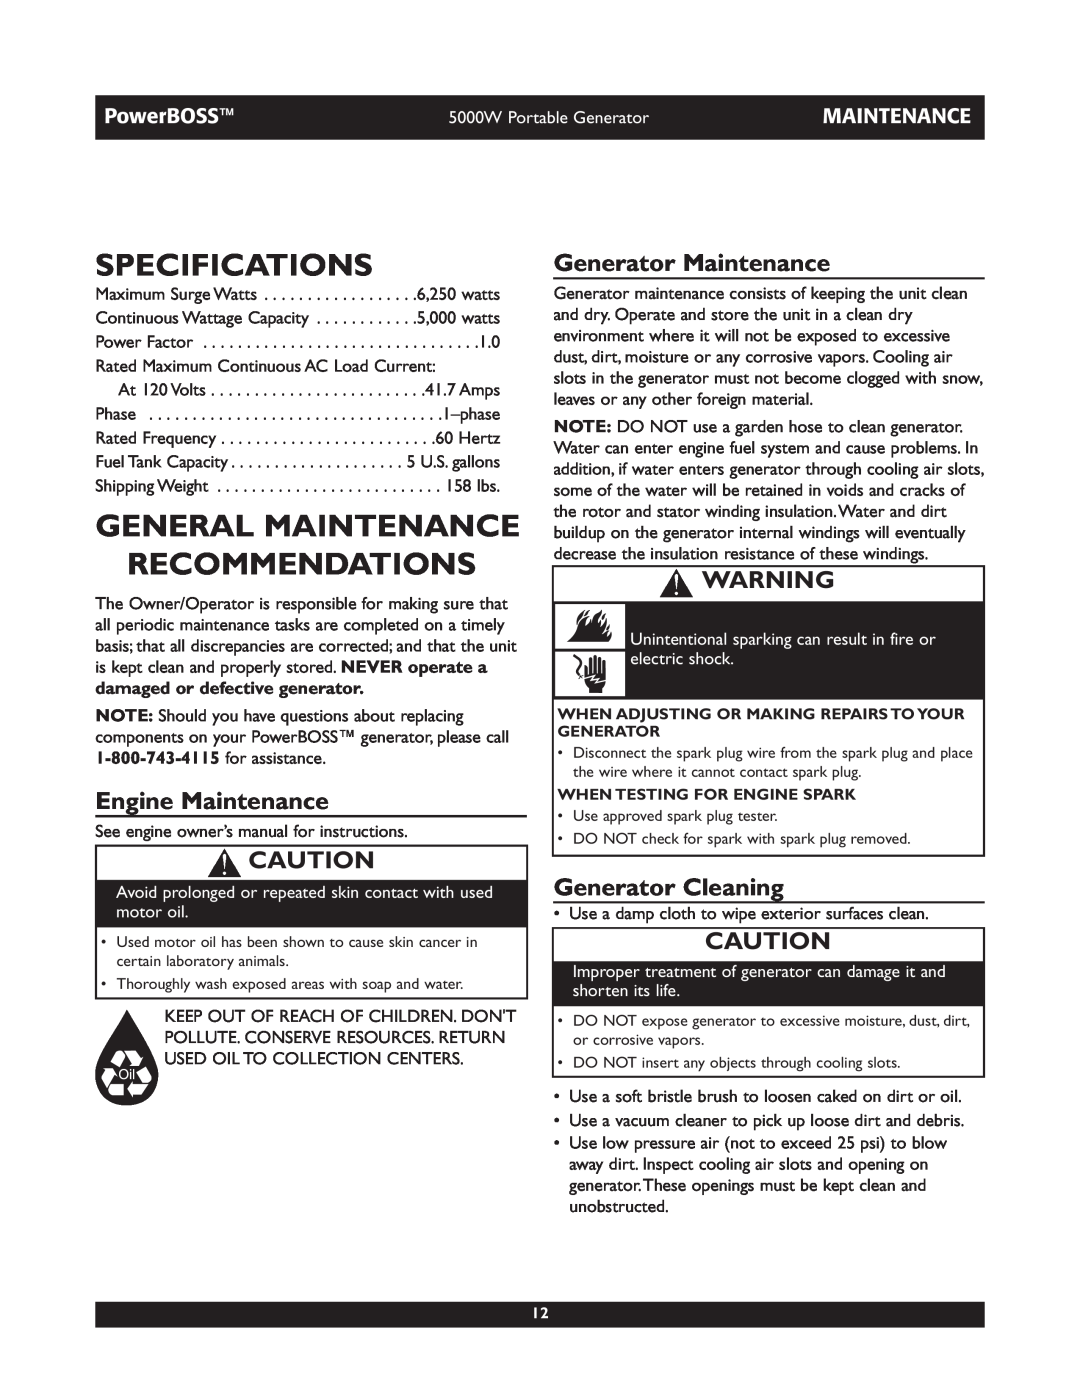 Briggs & Stratton 030222 Specifications, General Maintenance Recommendations, Engine Maintenance, Generator Maintenance 